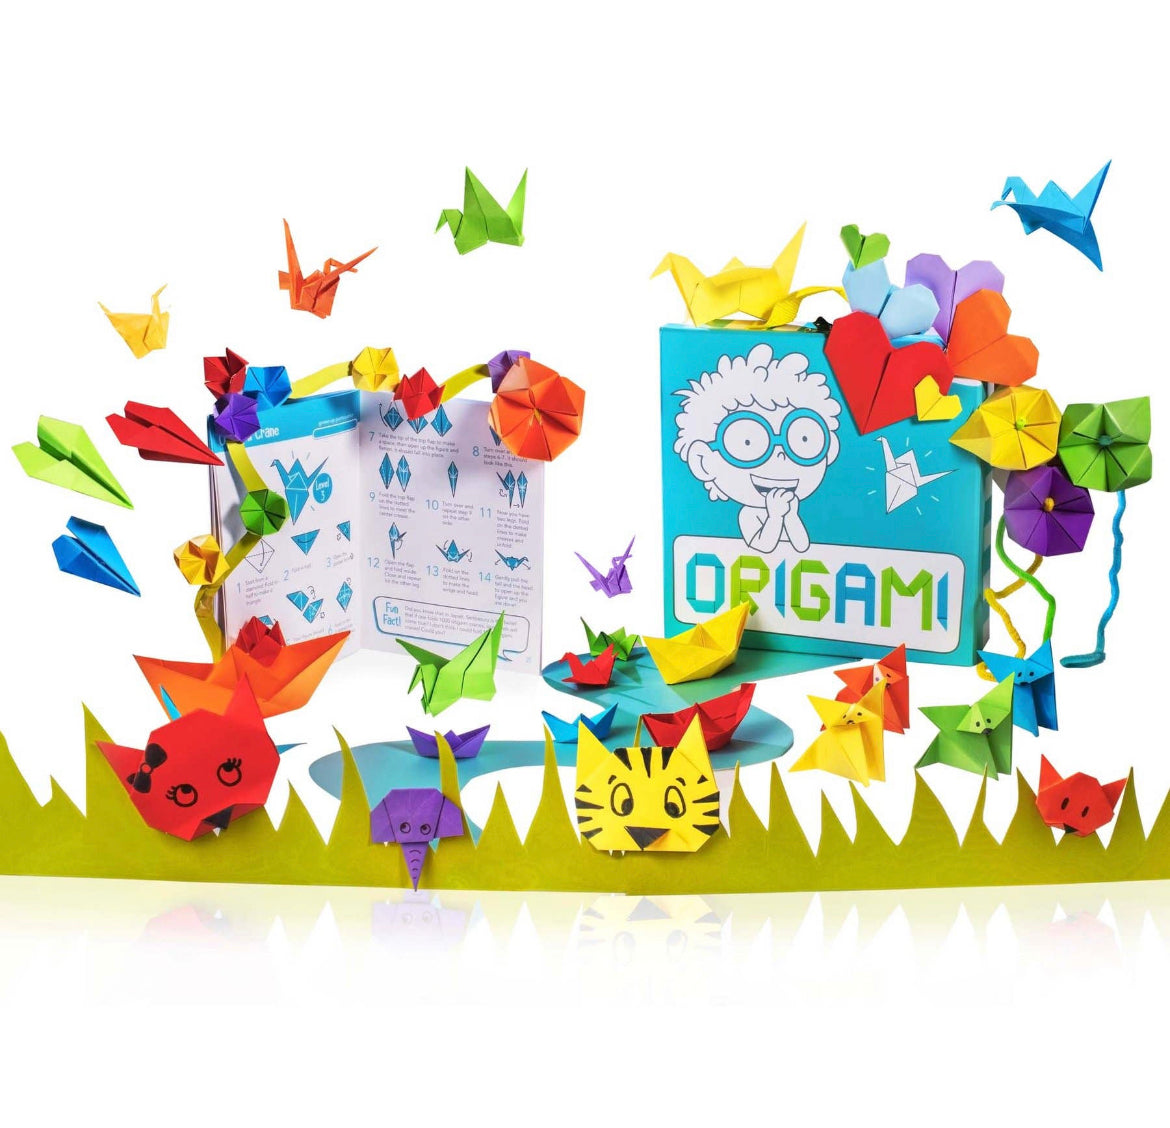 Open the Joy-Origami Kit